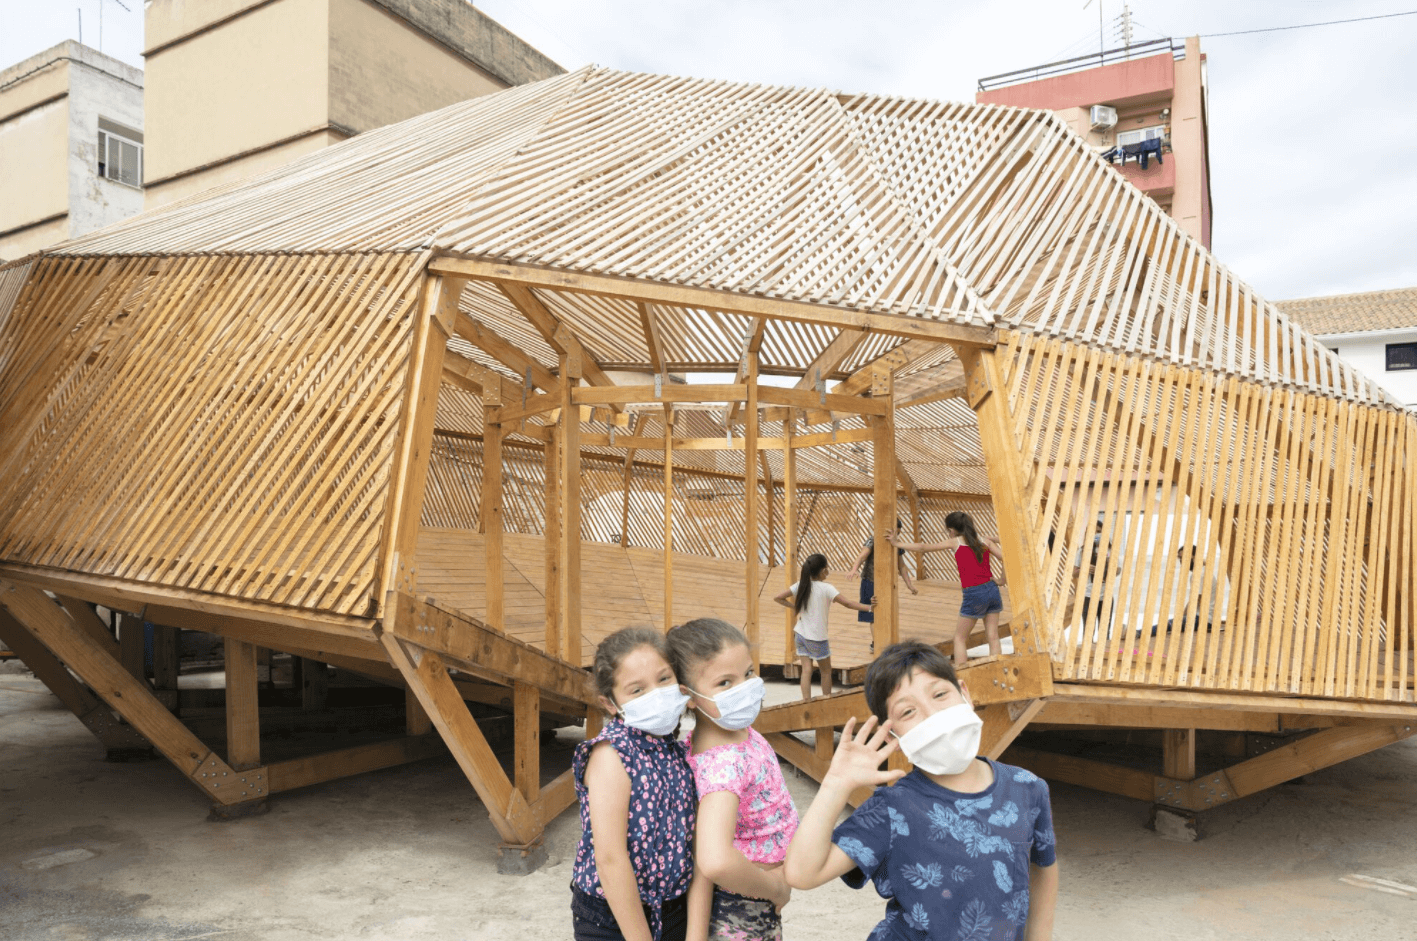 Zona Santiago Outdoor Classroom by Bernat Ivars + mixuro